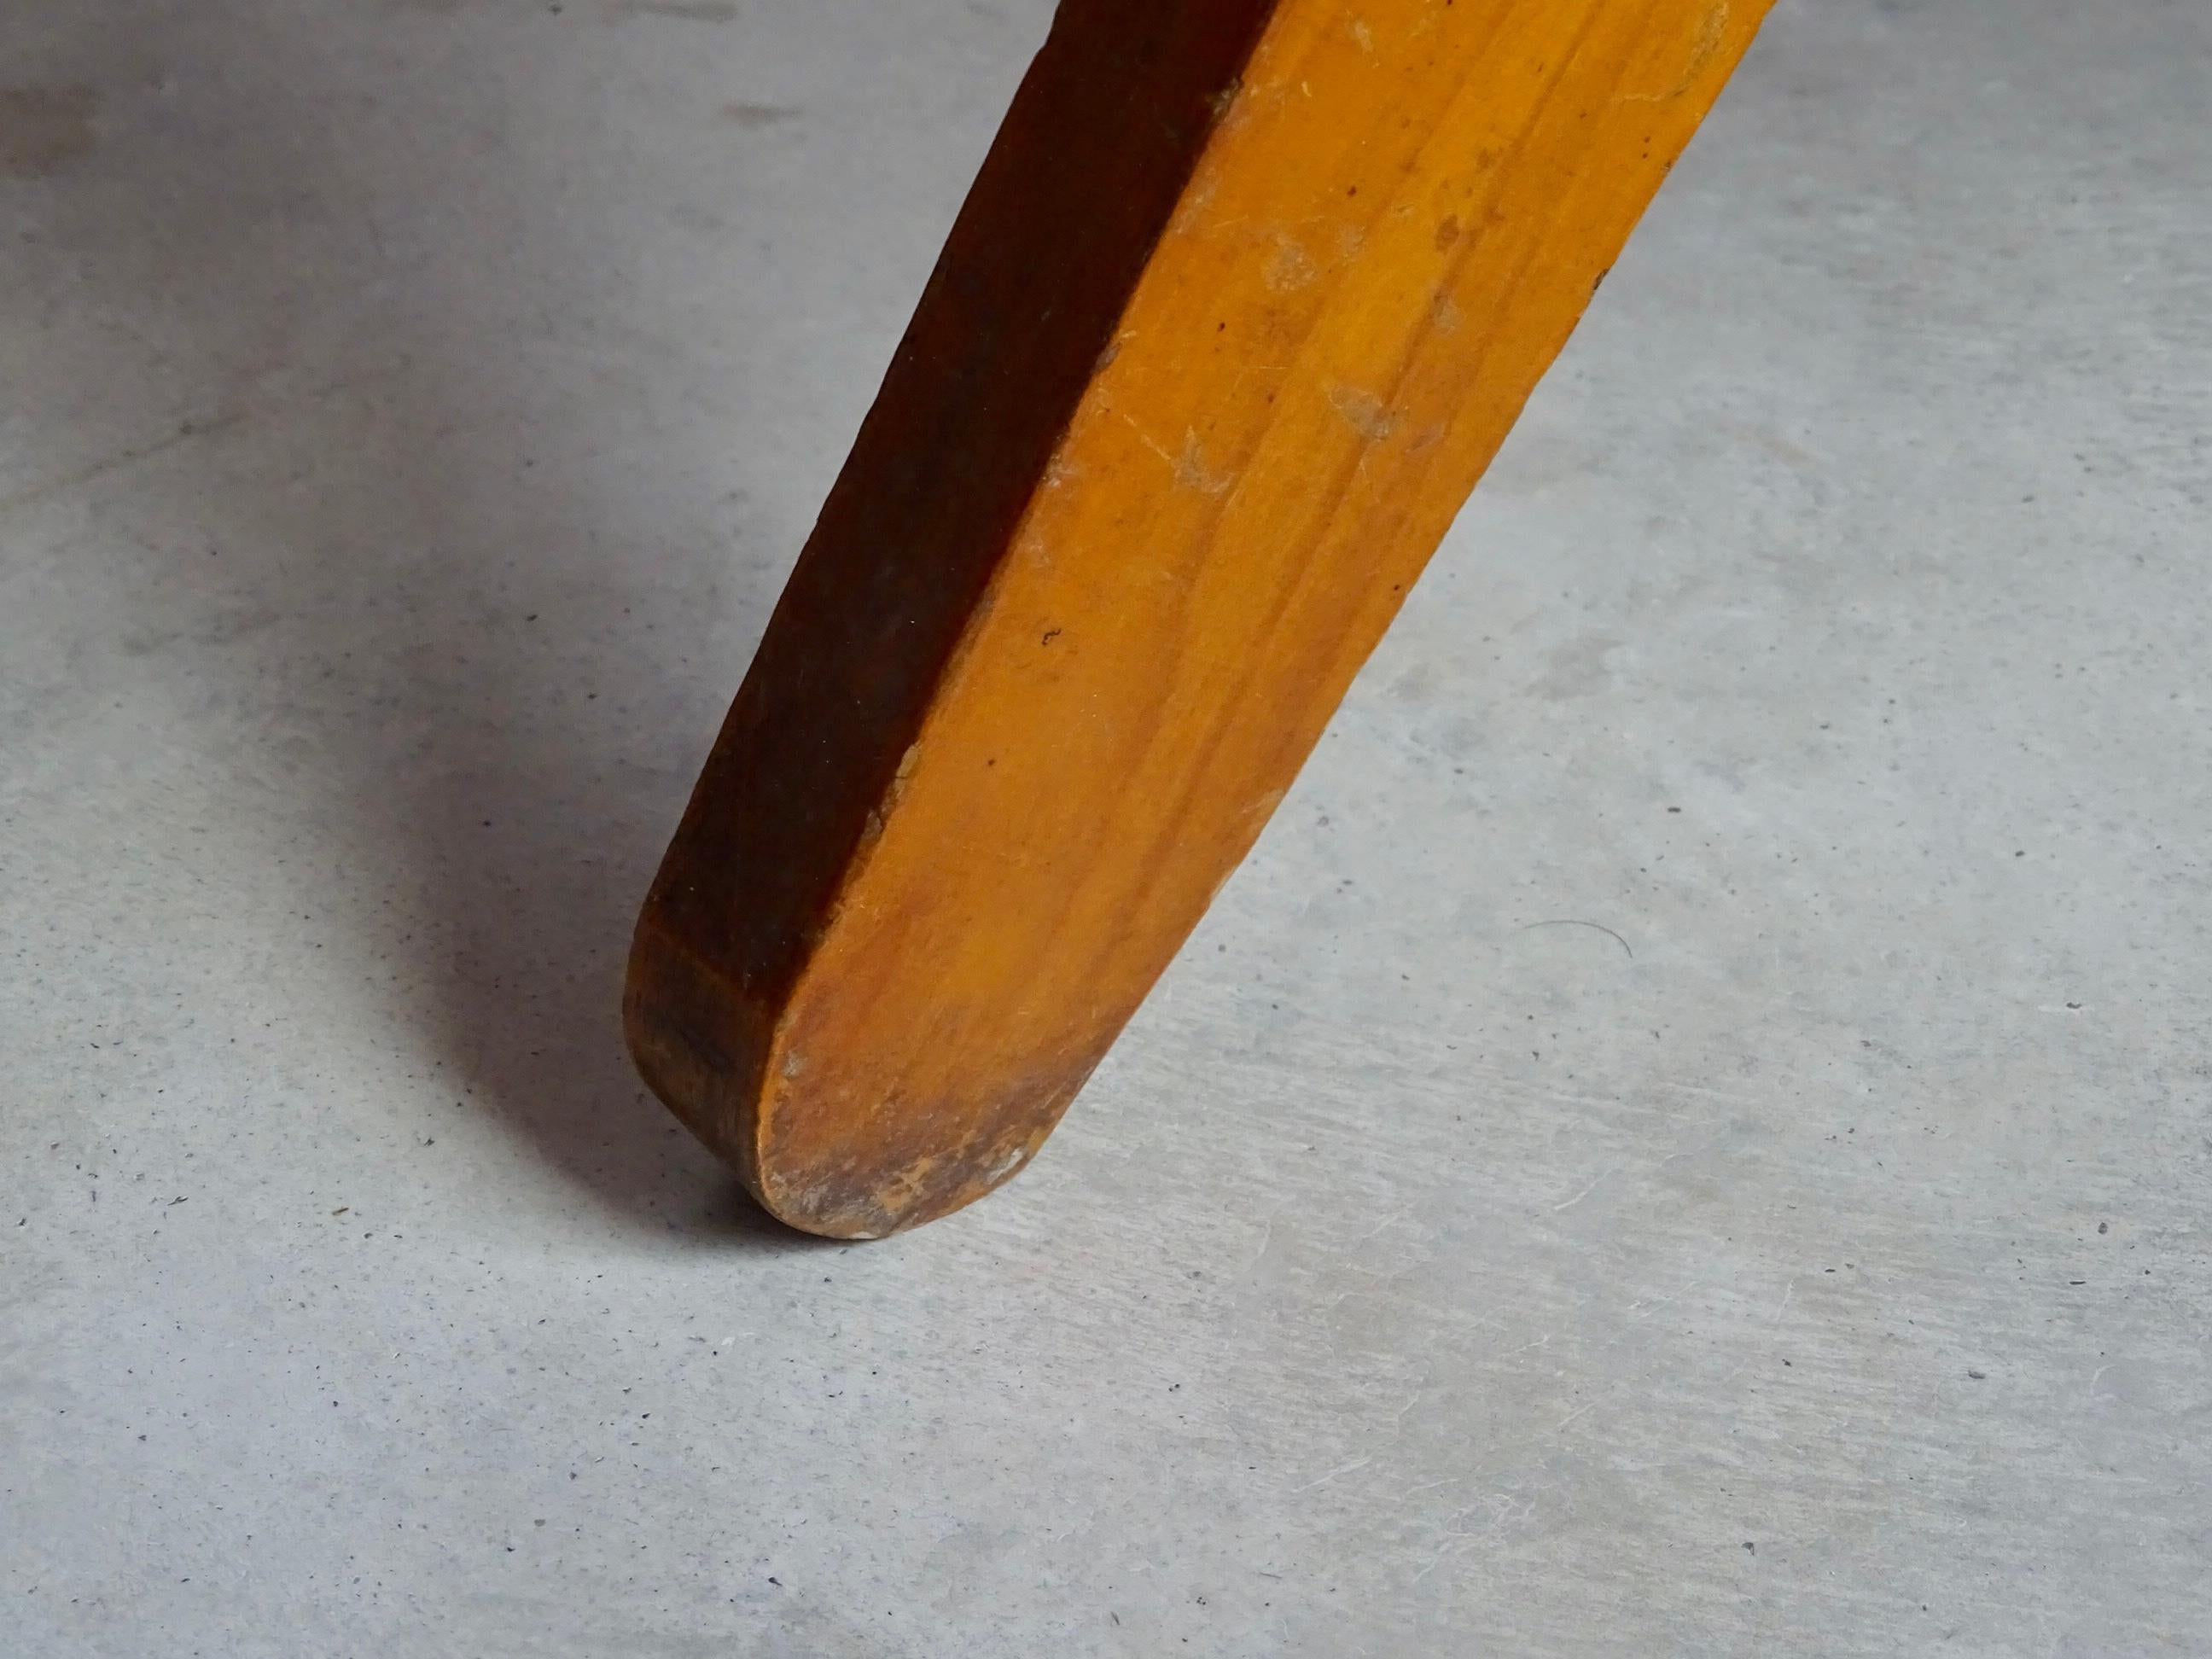 Hardwood Mid-Century Modern Table Designed by Zanine Caldas, Brazil, 1950s For Sale